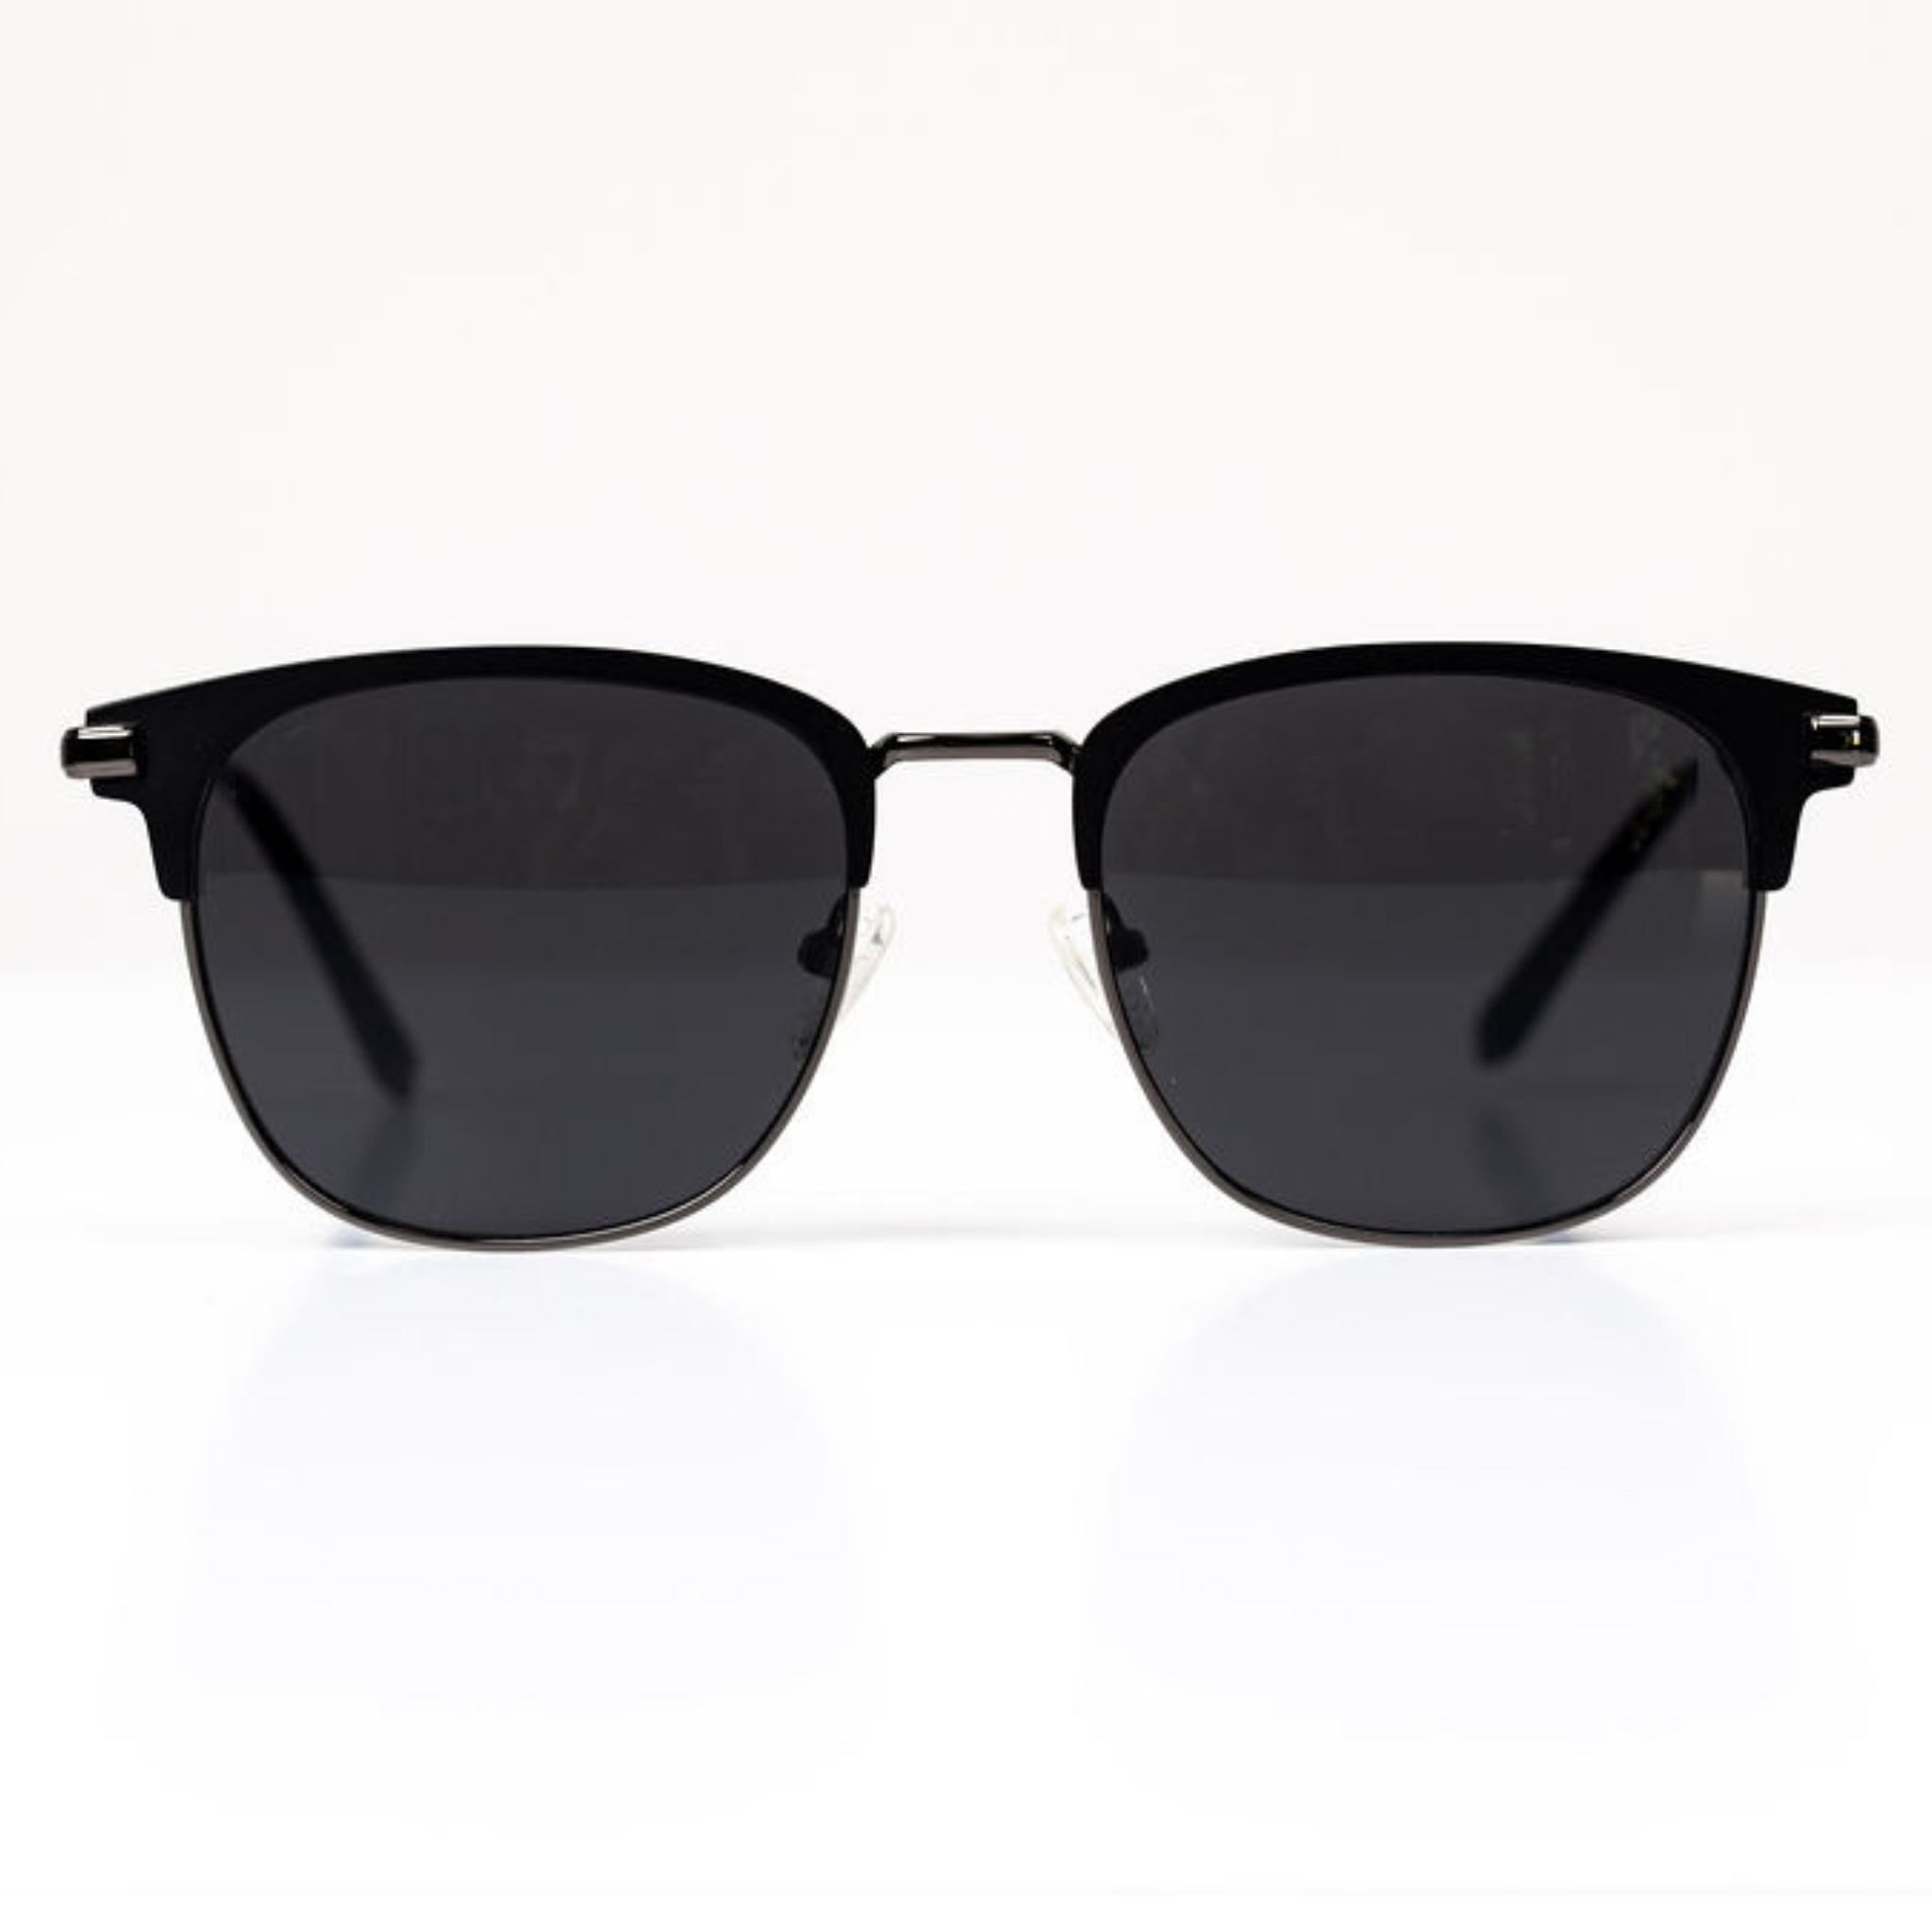 Grady - Blue Eye Sunglasses: Shatter Resistant Sunglasses Aviator